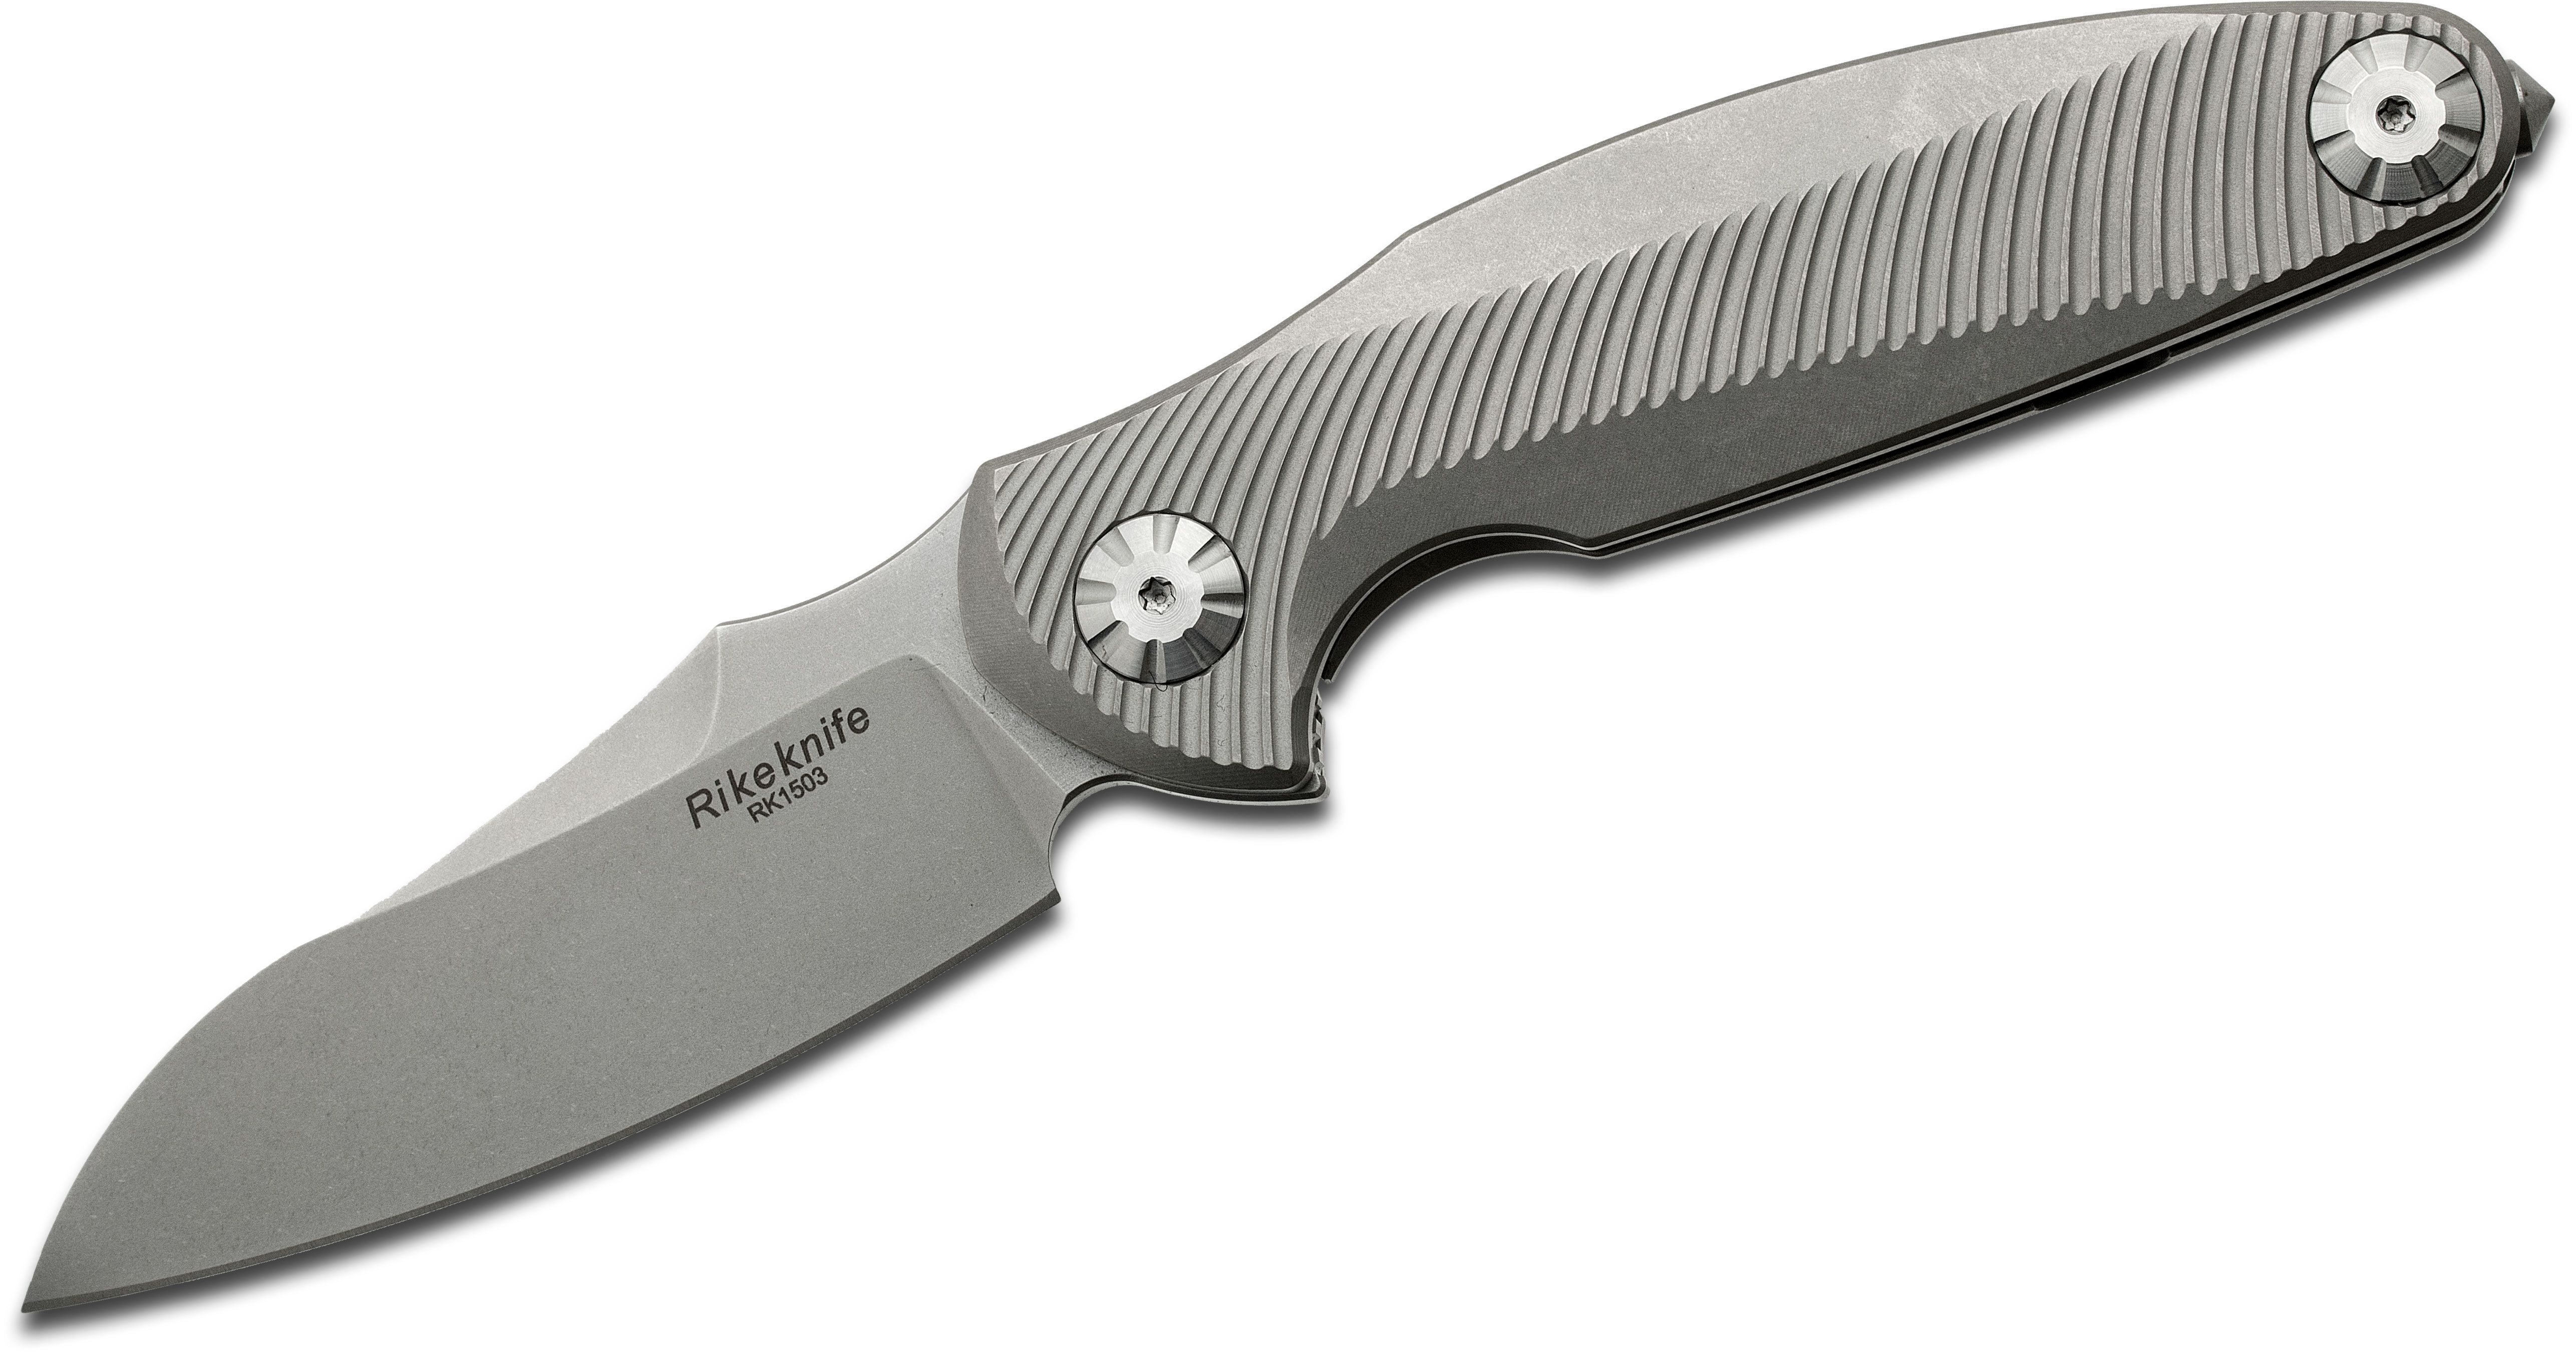 Rike Knife - Tactical Scissors